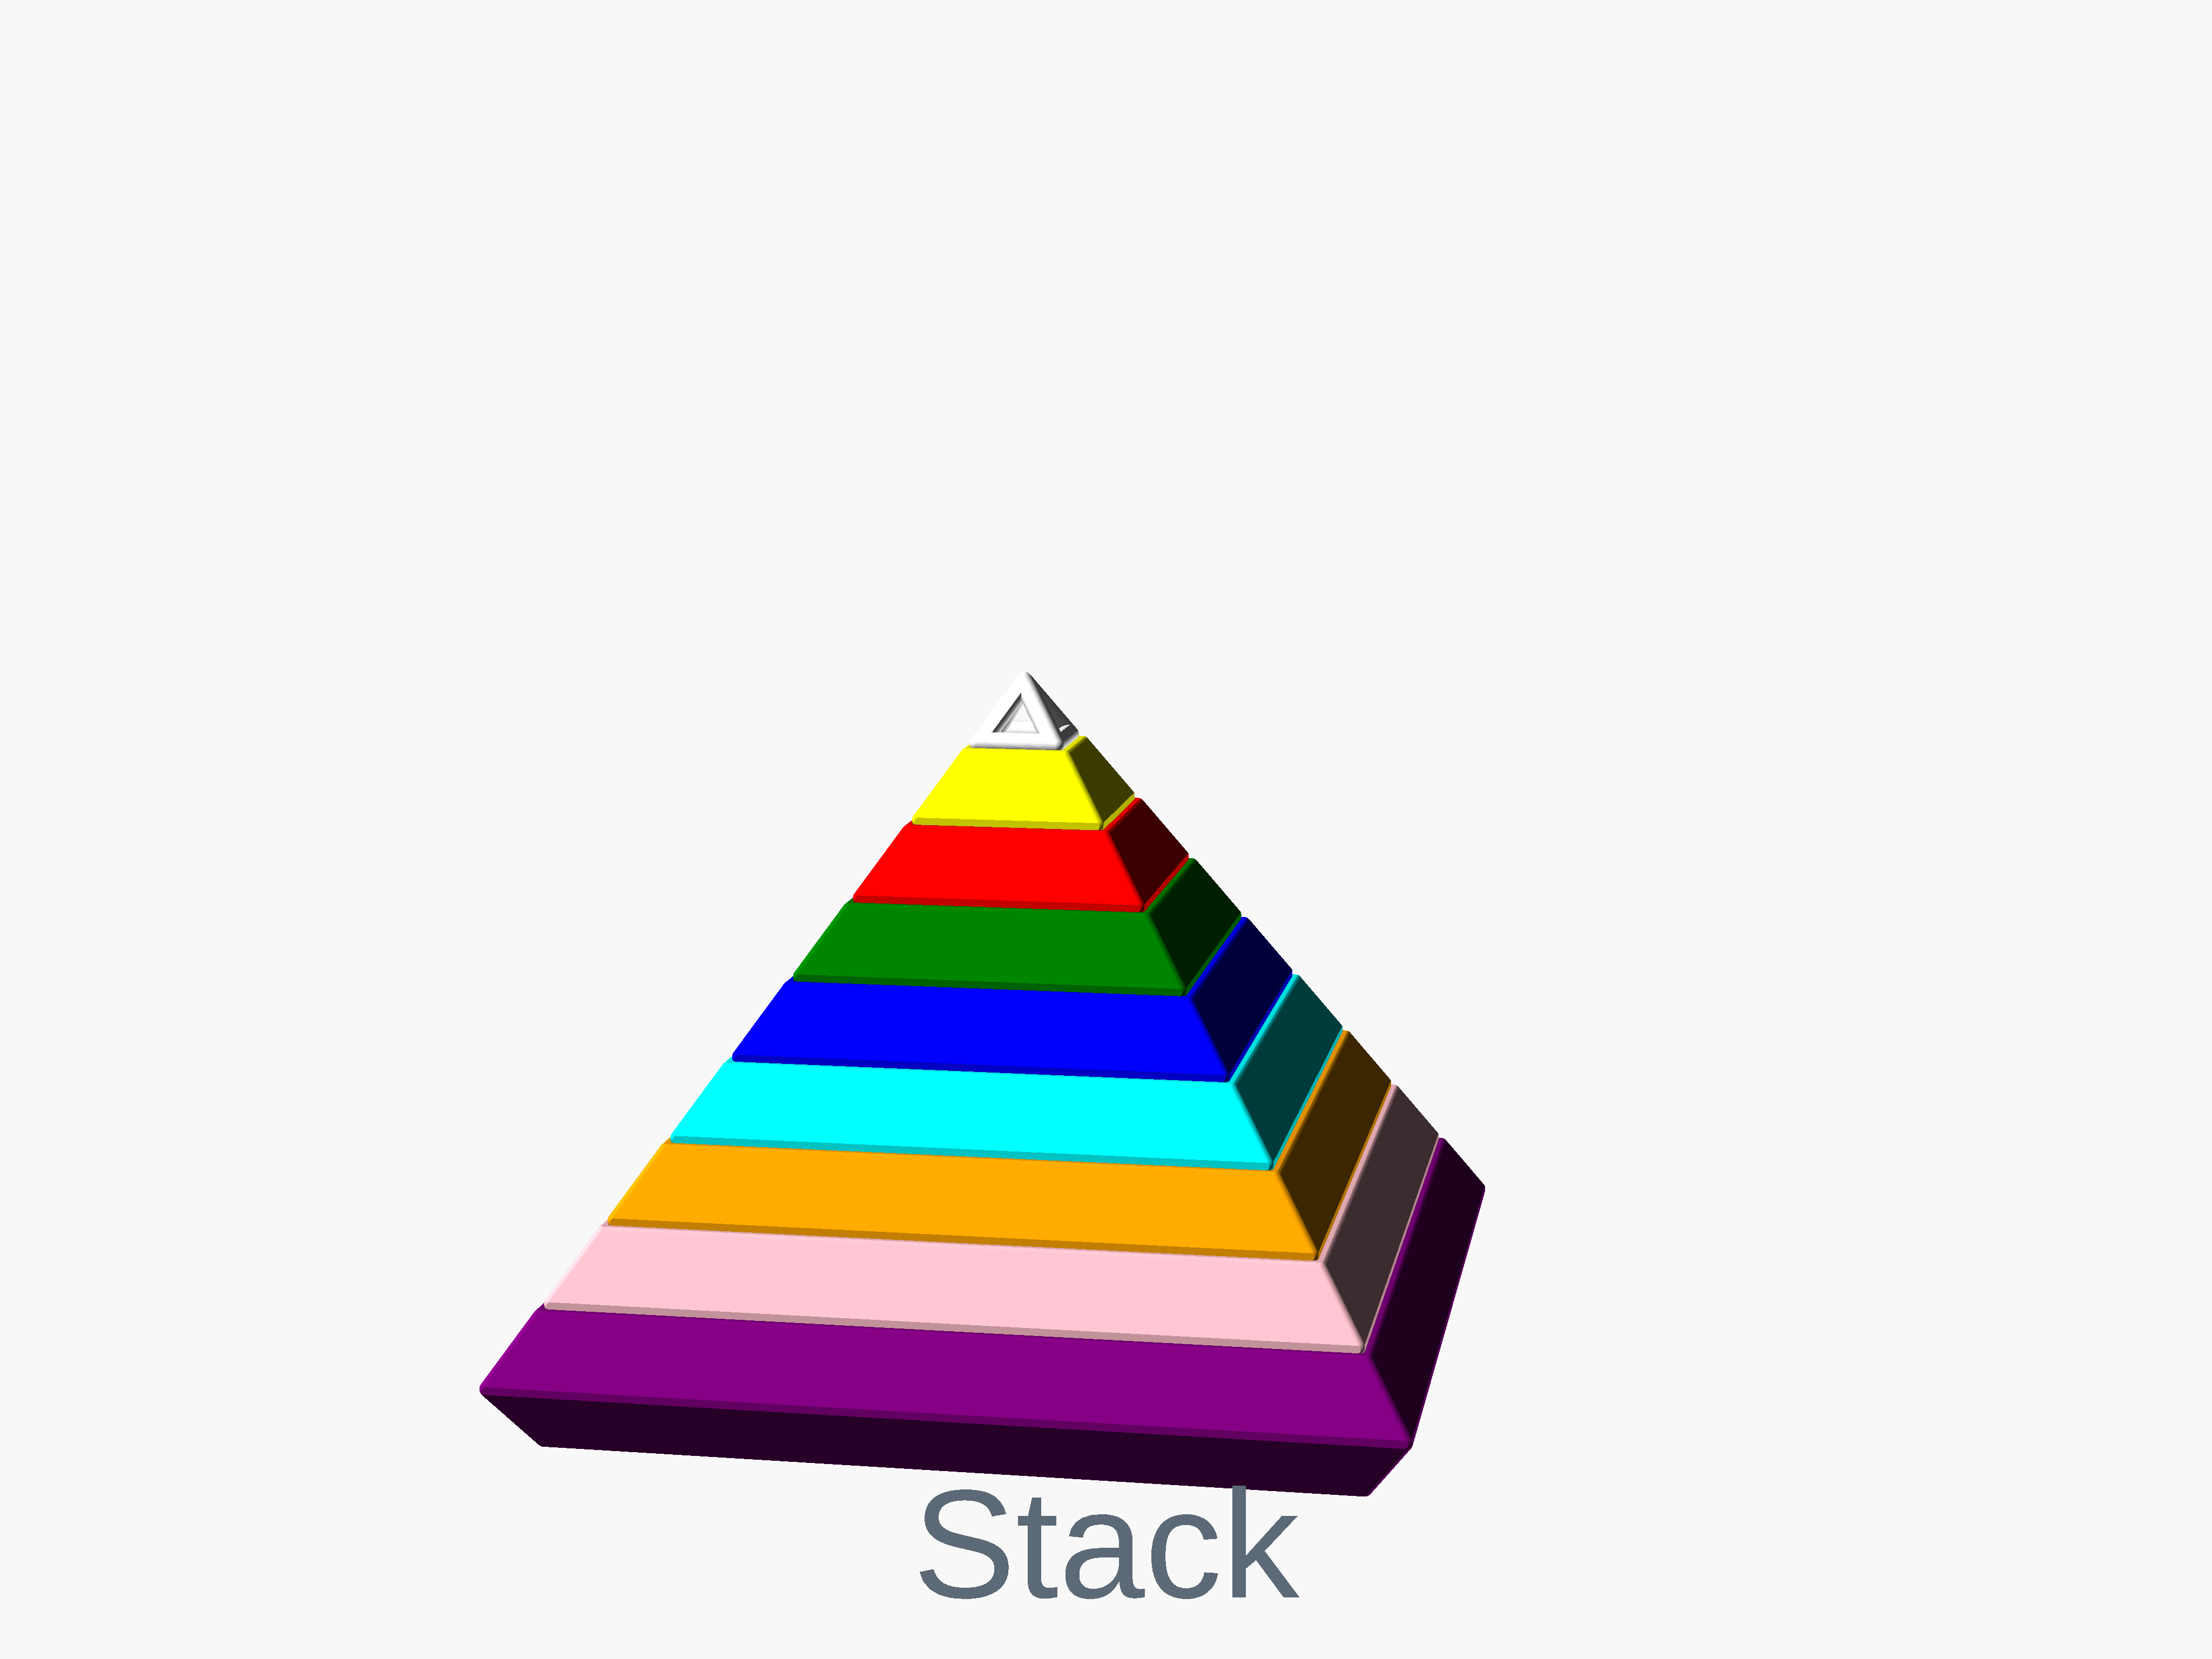 Octahedron stack